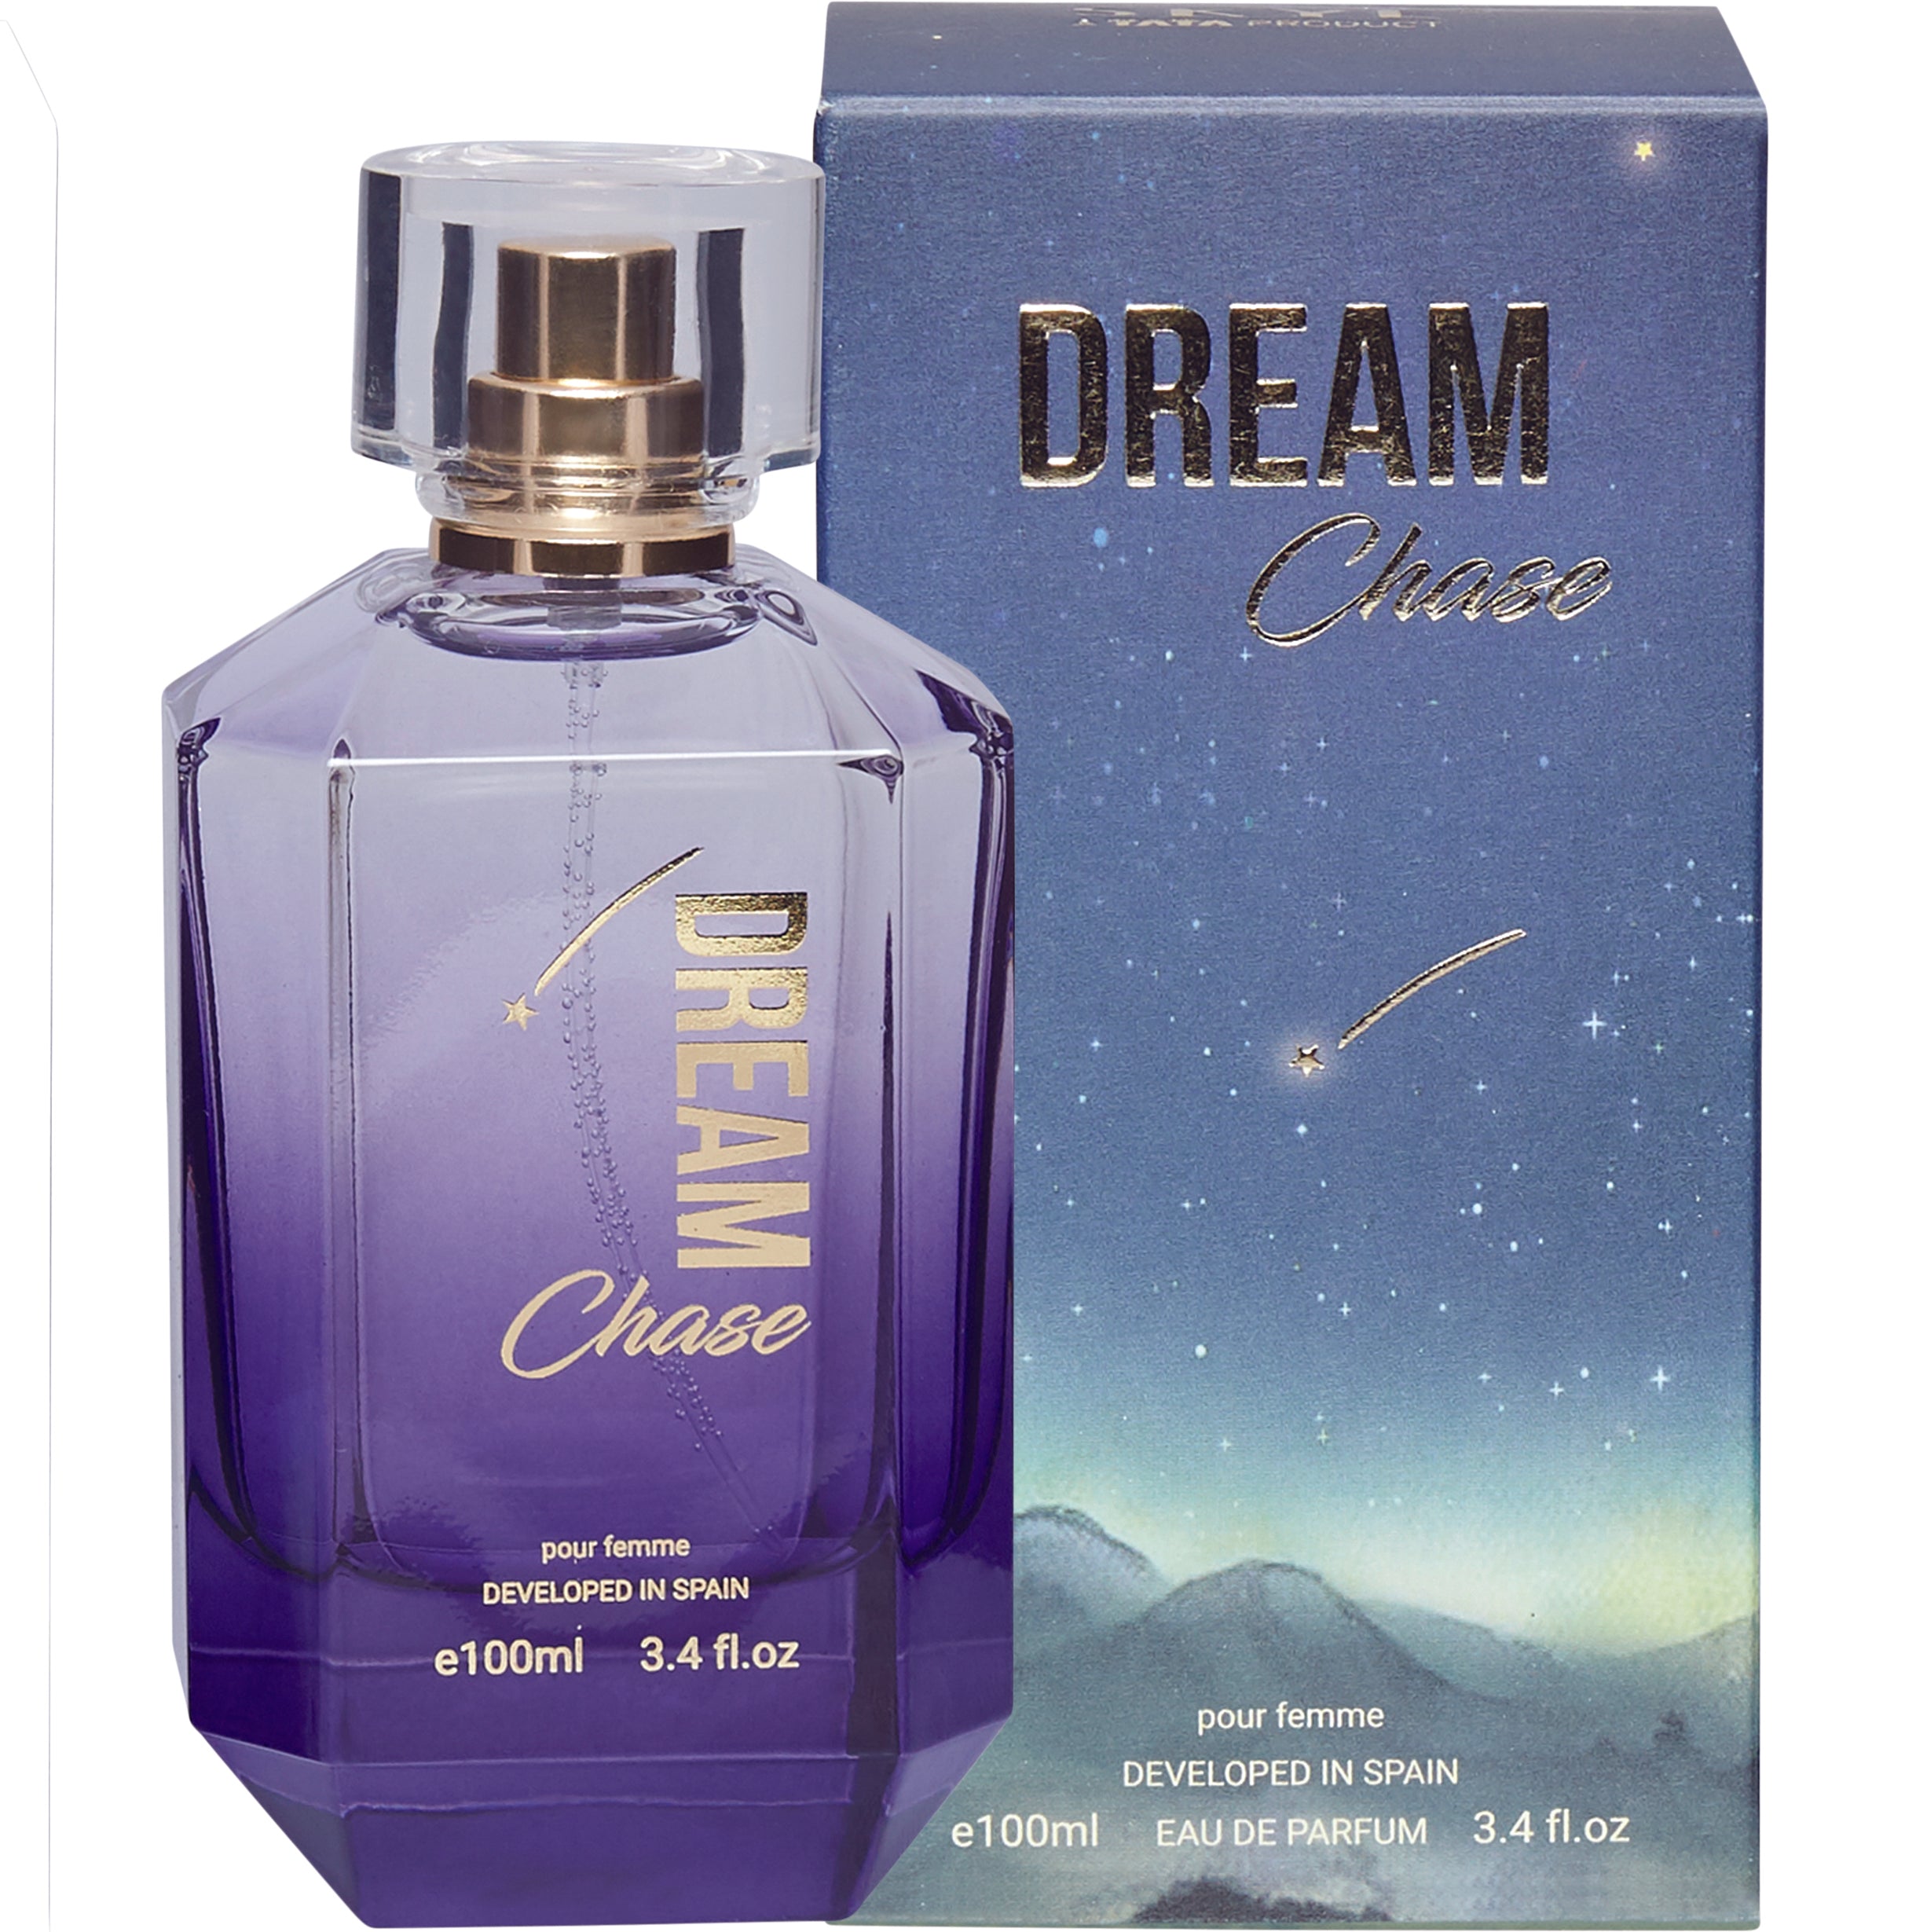 SKYE Dream Chase Pour Femme Perfume 100ML. – Star Bazaar